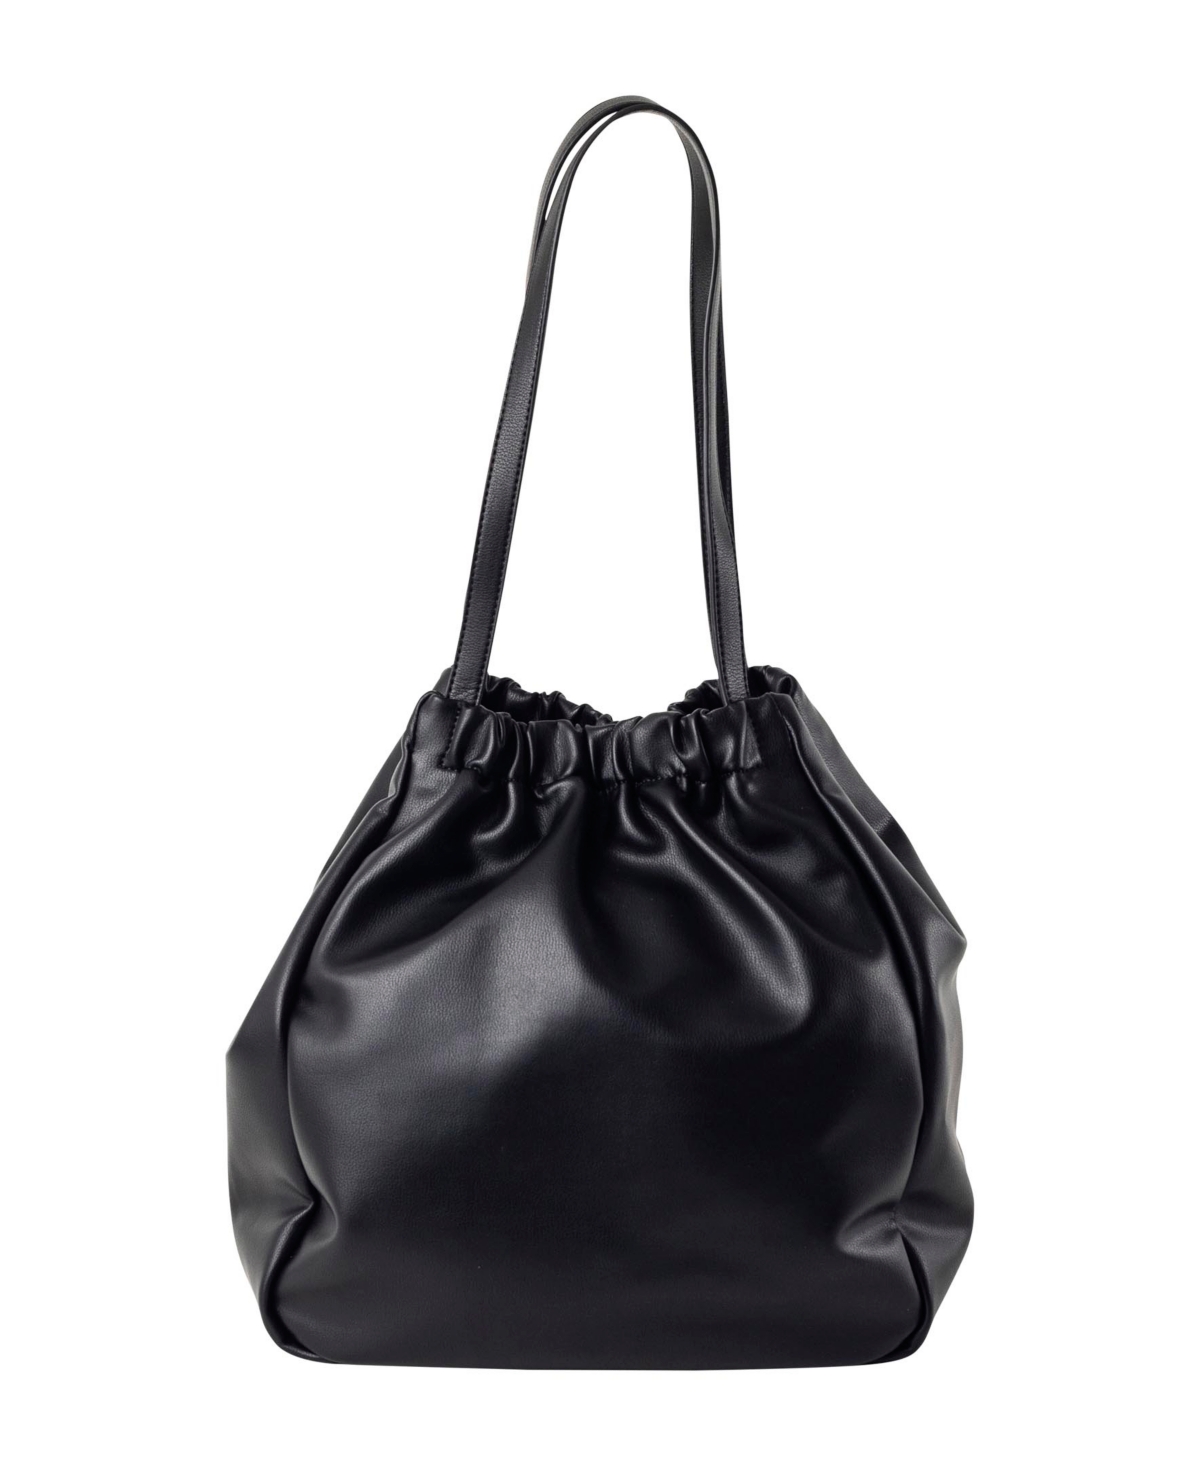 Urban Originals Paradise Faux Leather Tote Bag In Black